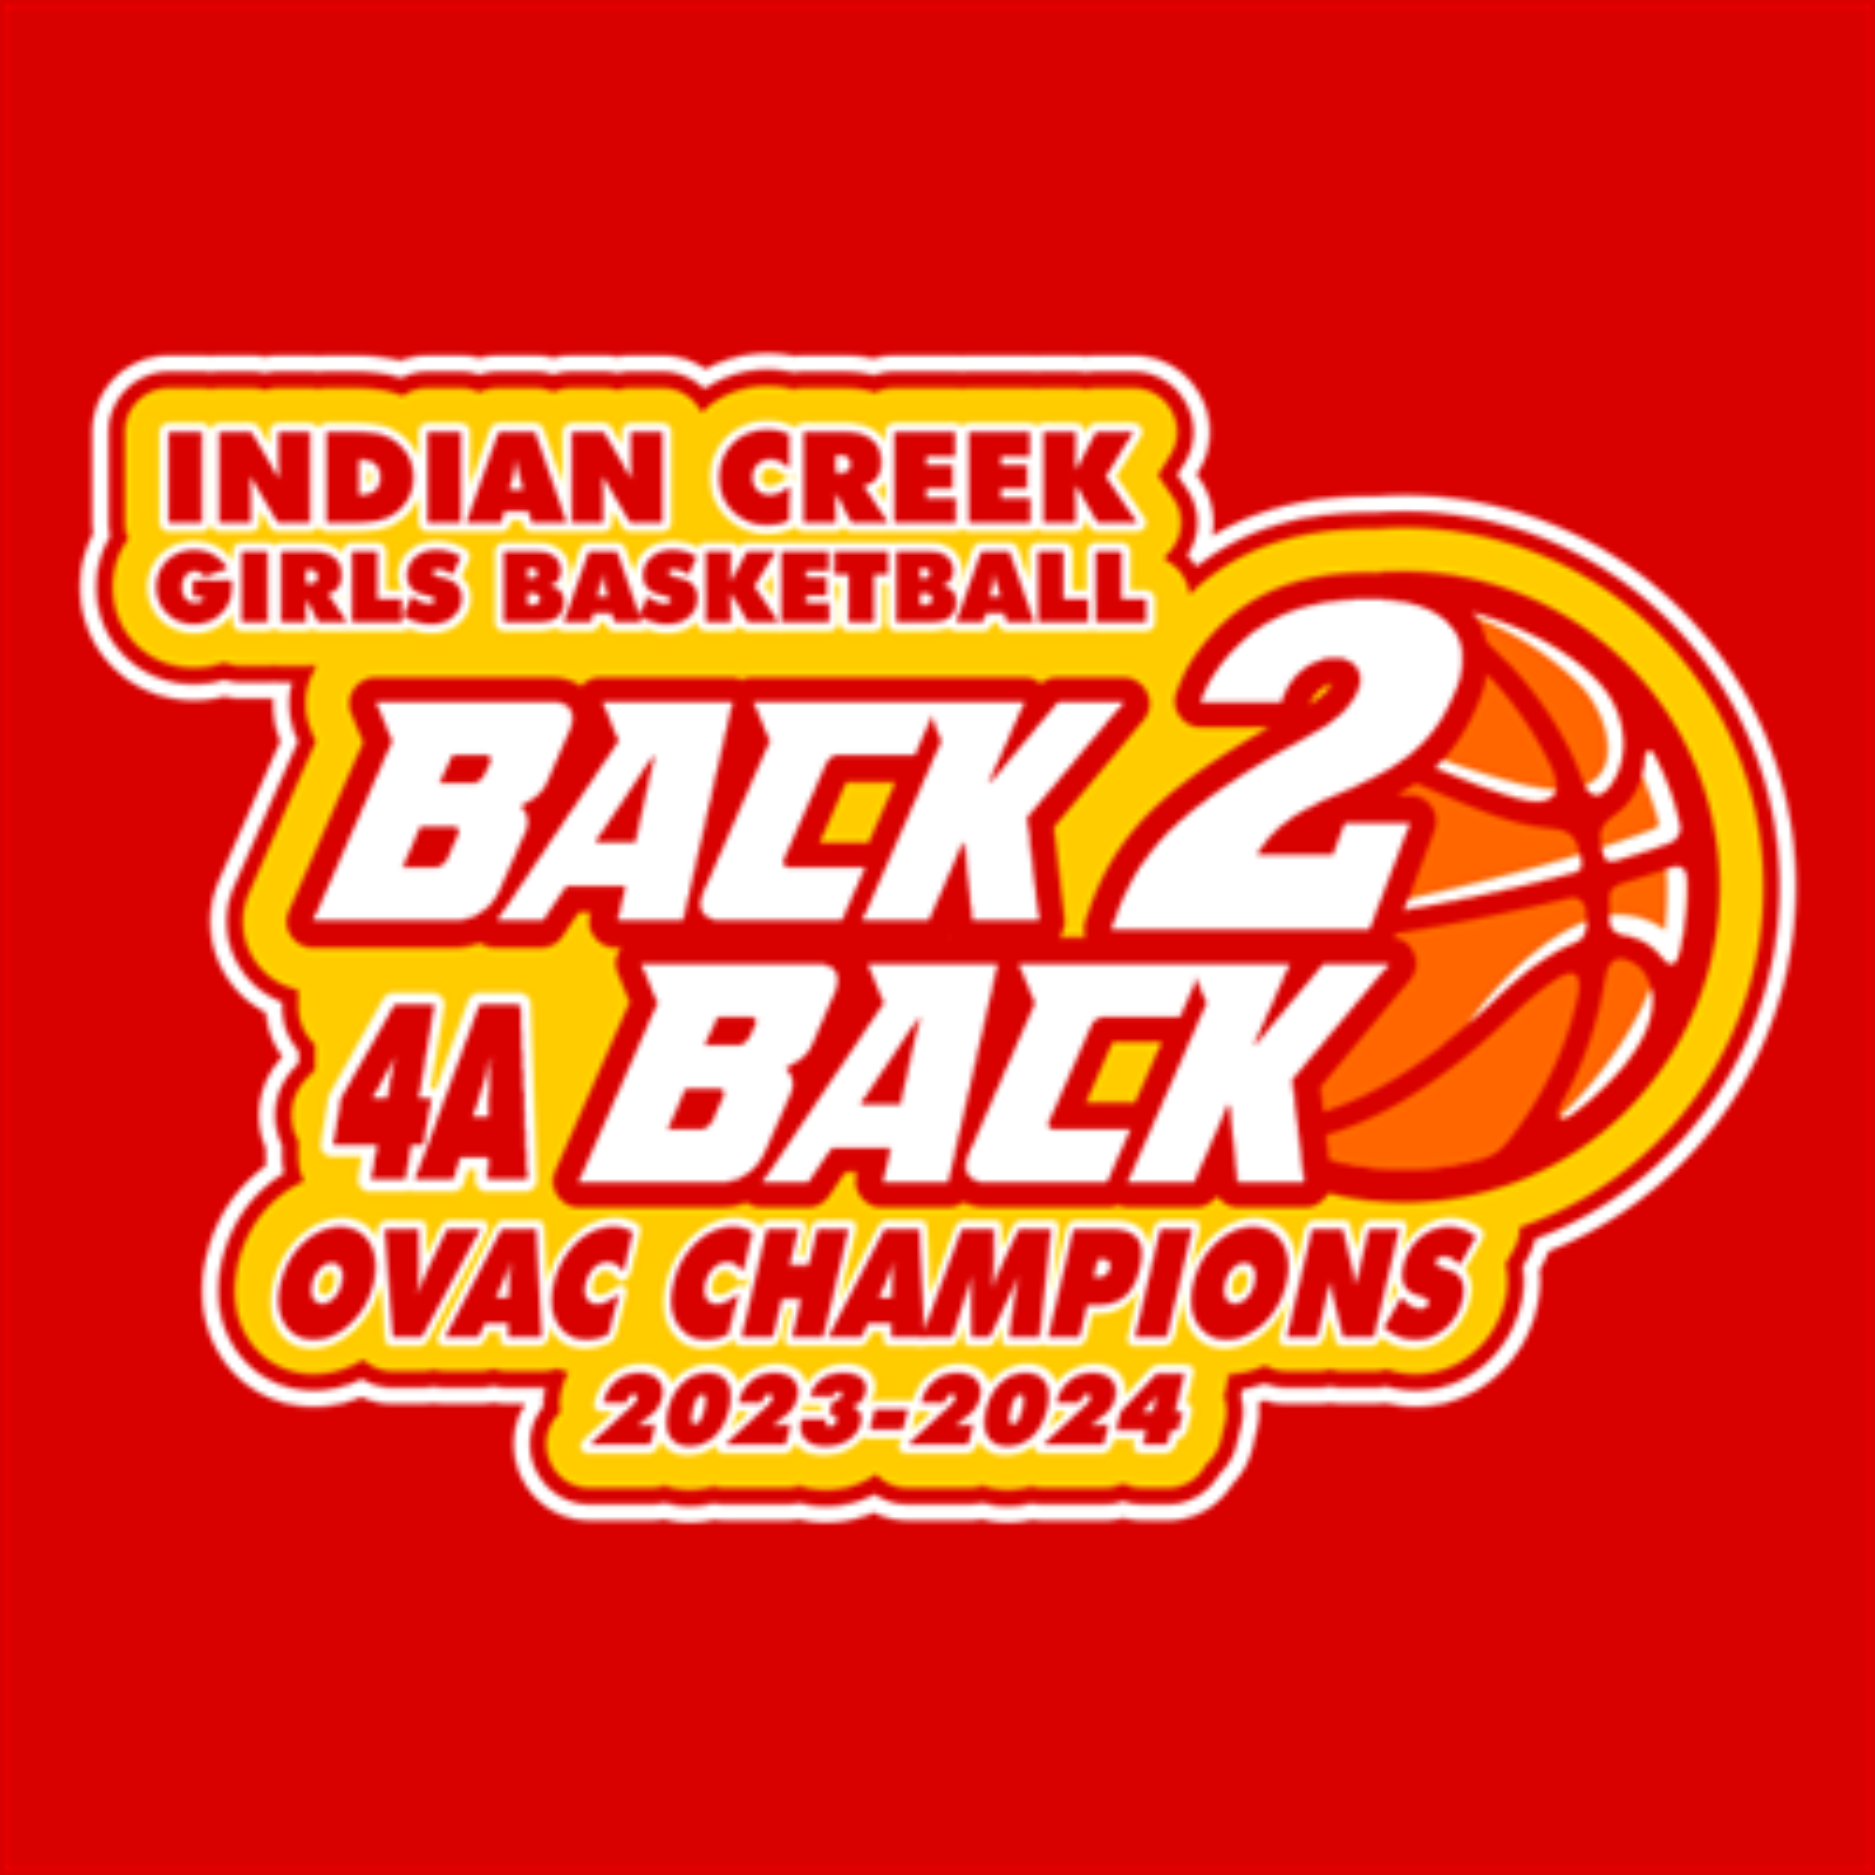 Indian Creek Girls Basketball OVAC Champs 2024 logo